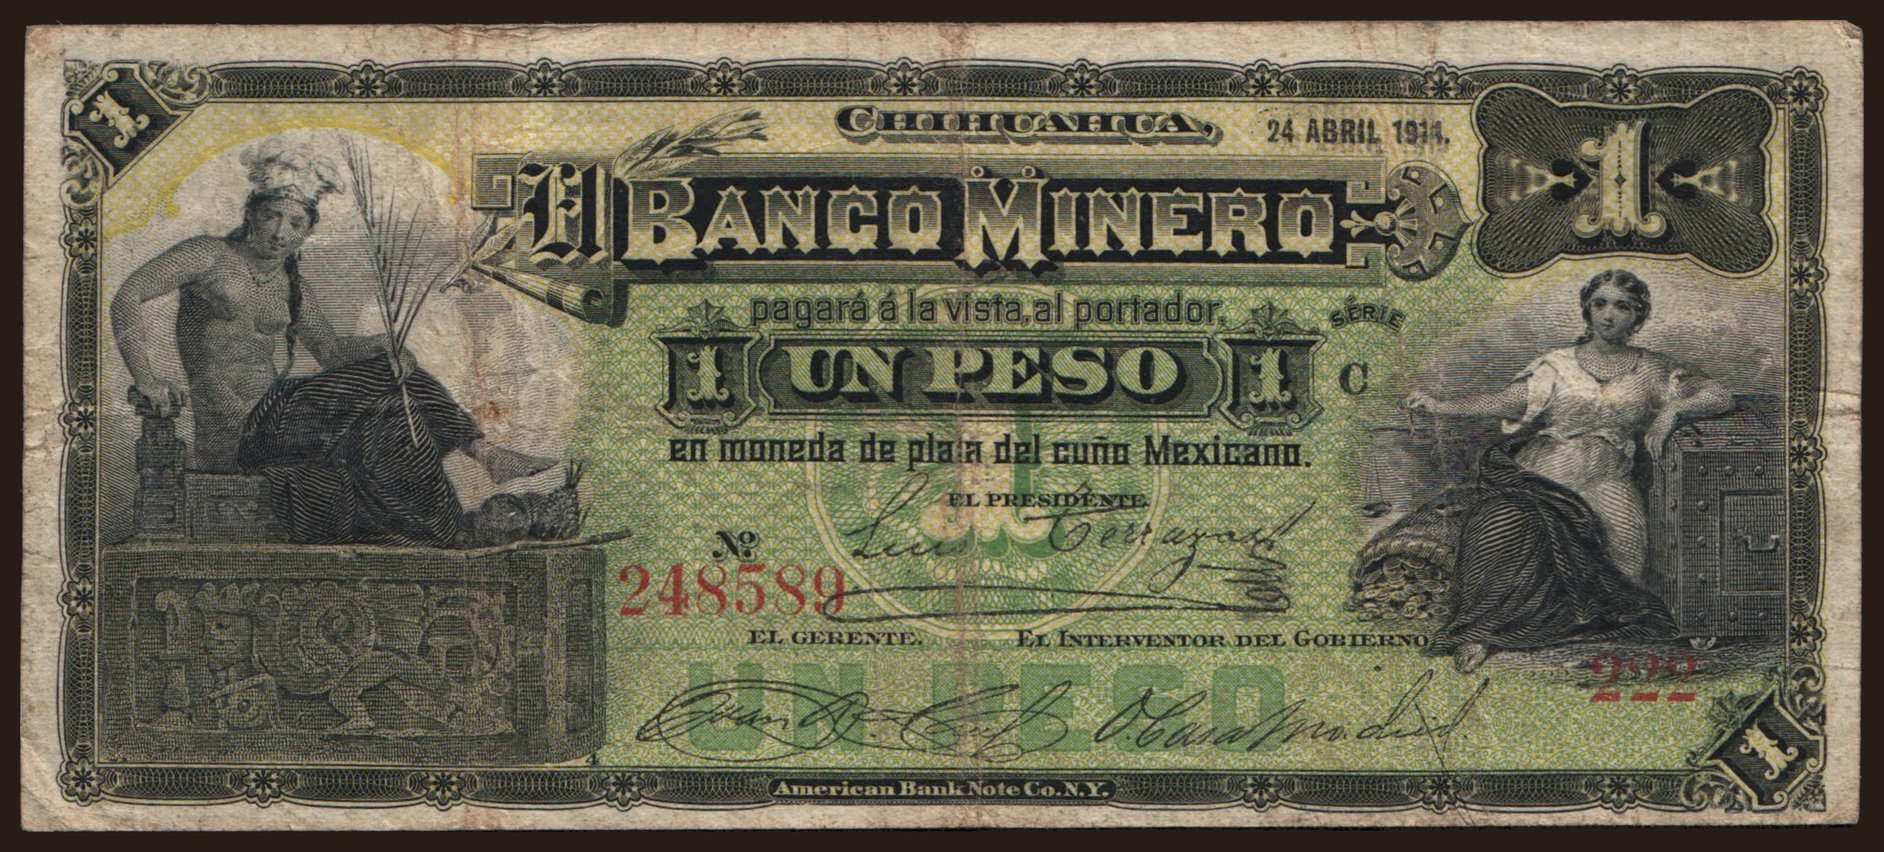 Chihuahua/ El Banco Minero, 1 peso, 1914